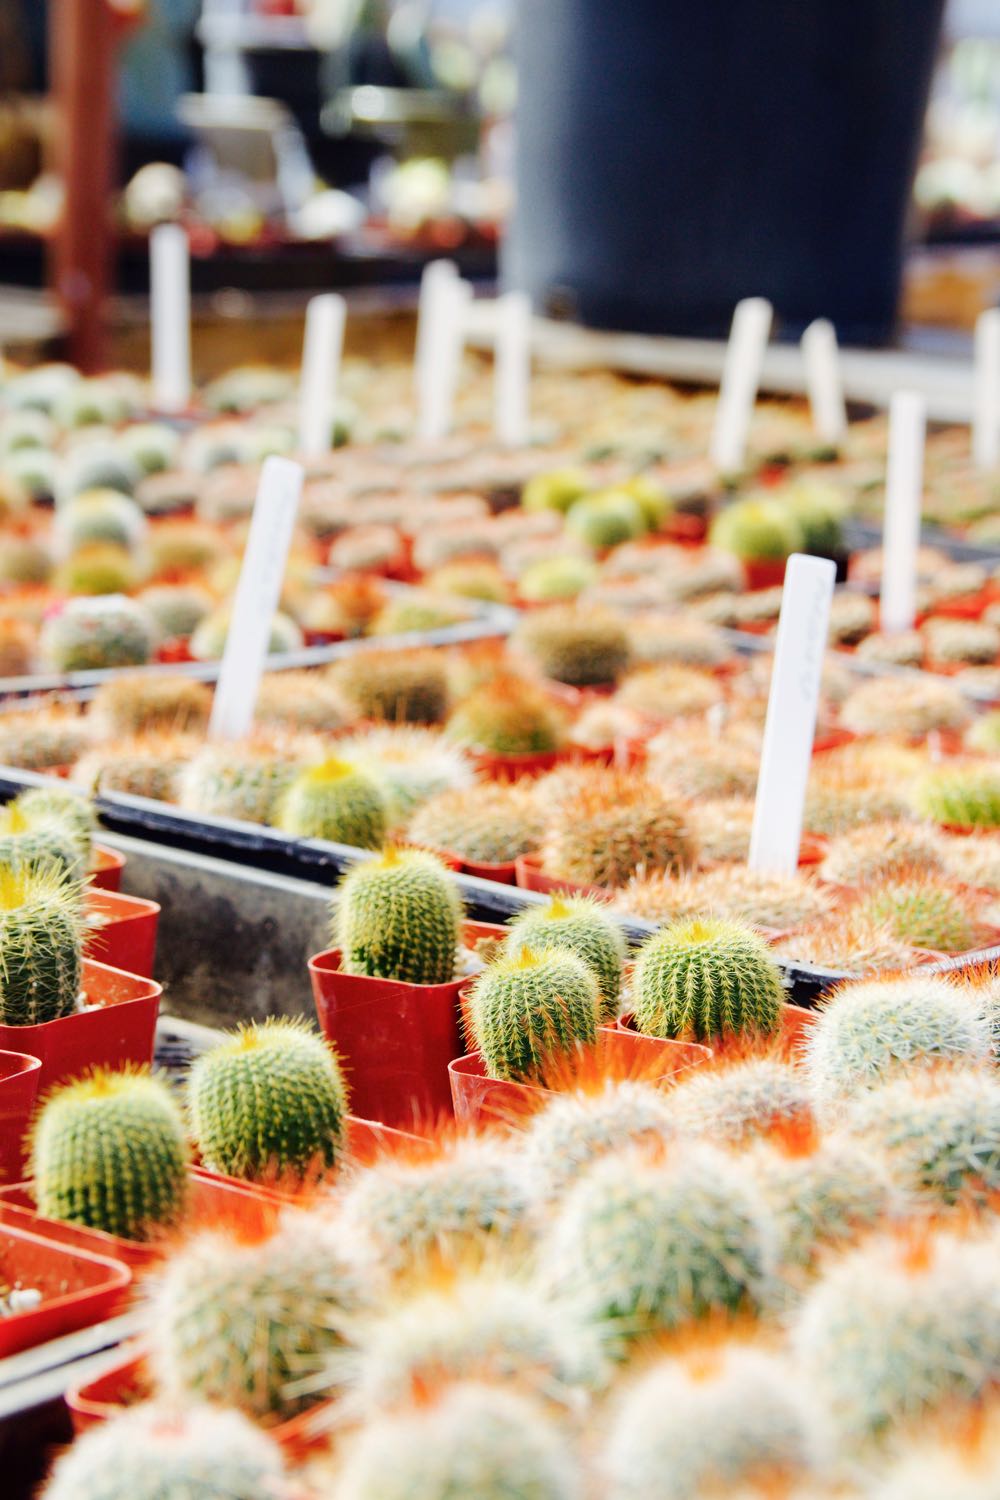 The Cactus Mart in Morongo Valley, California